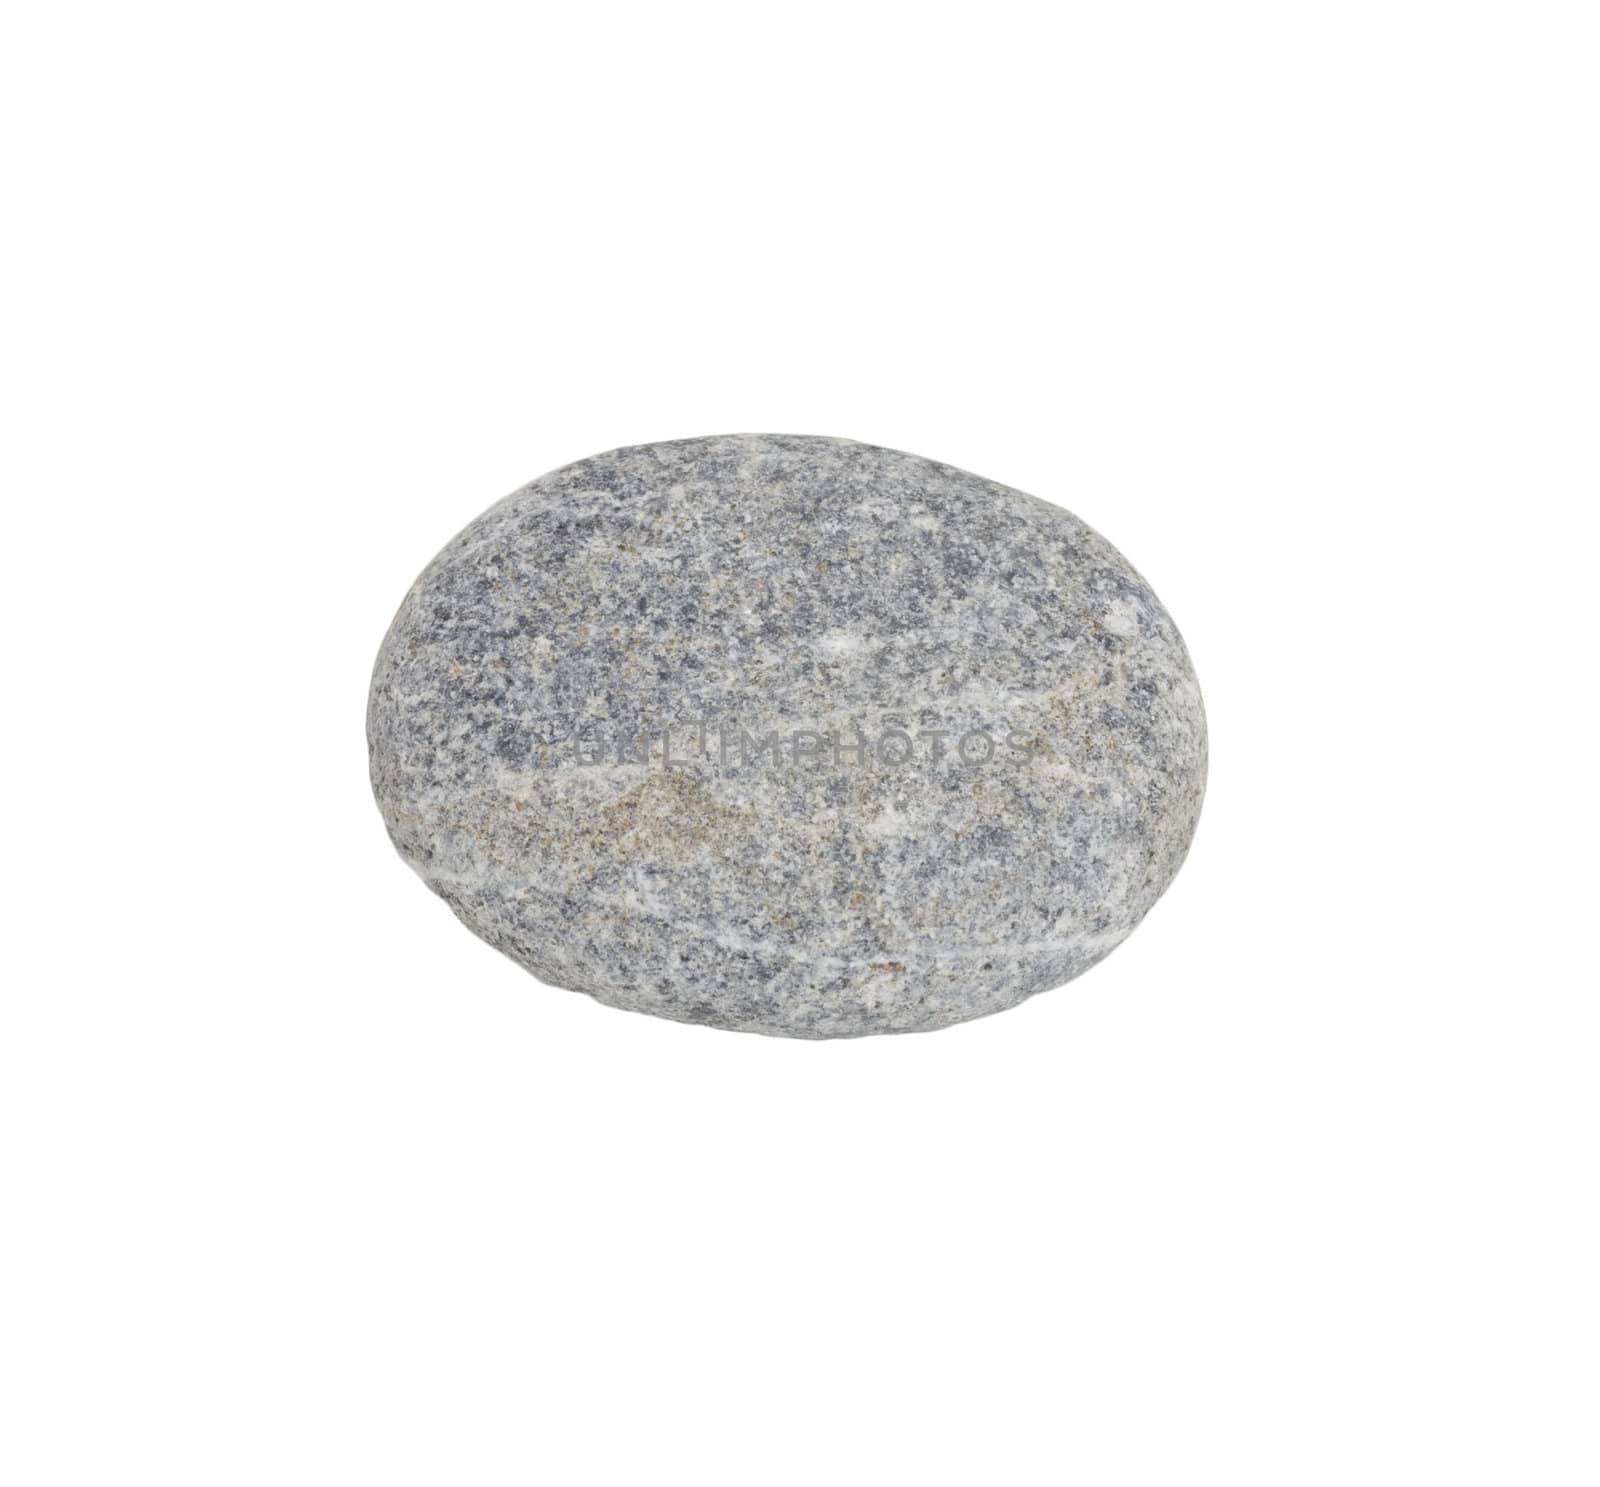 stone on a white background by schankz